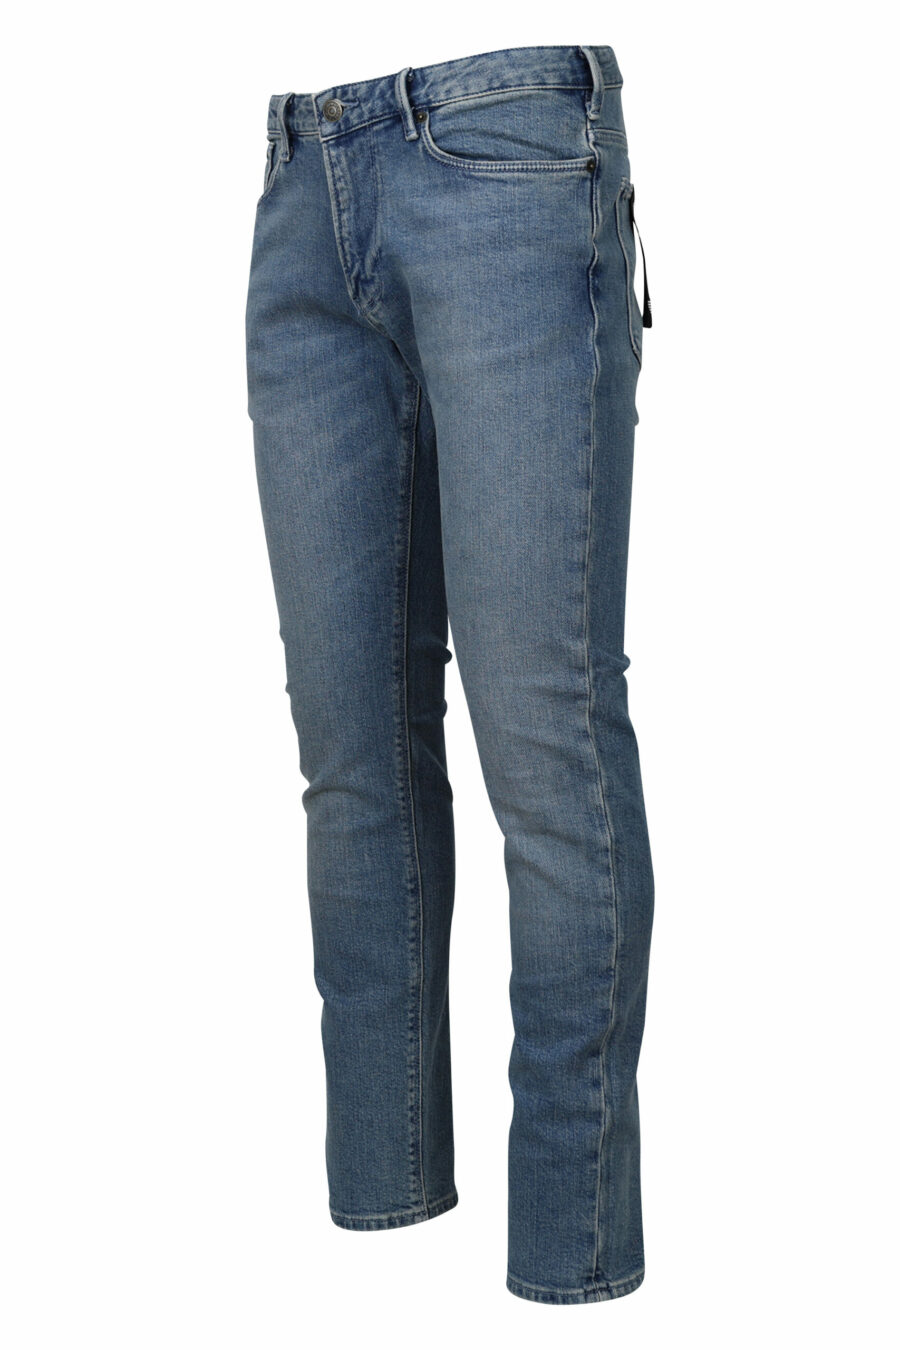 Hellblaue Jeans mit Metalladler - 8057767427009 2 skaliert